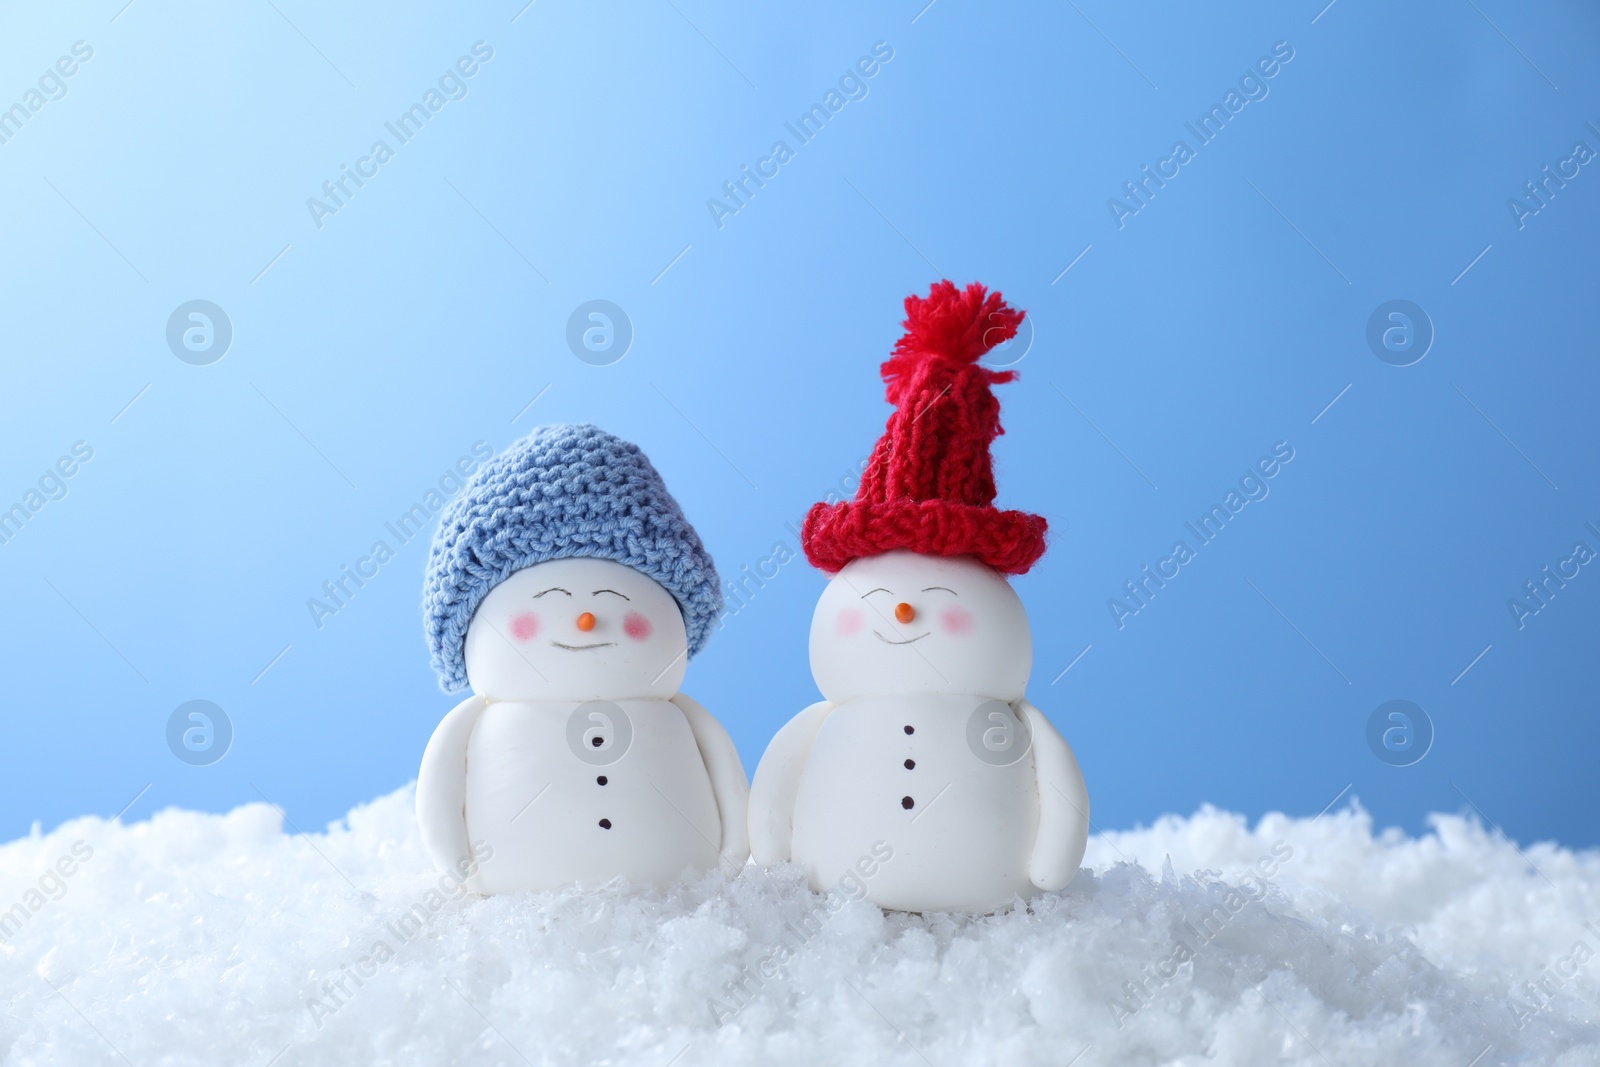 Photo of Cute decorative snowmen on artificial snow against light blue background